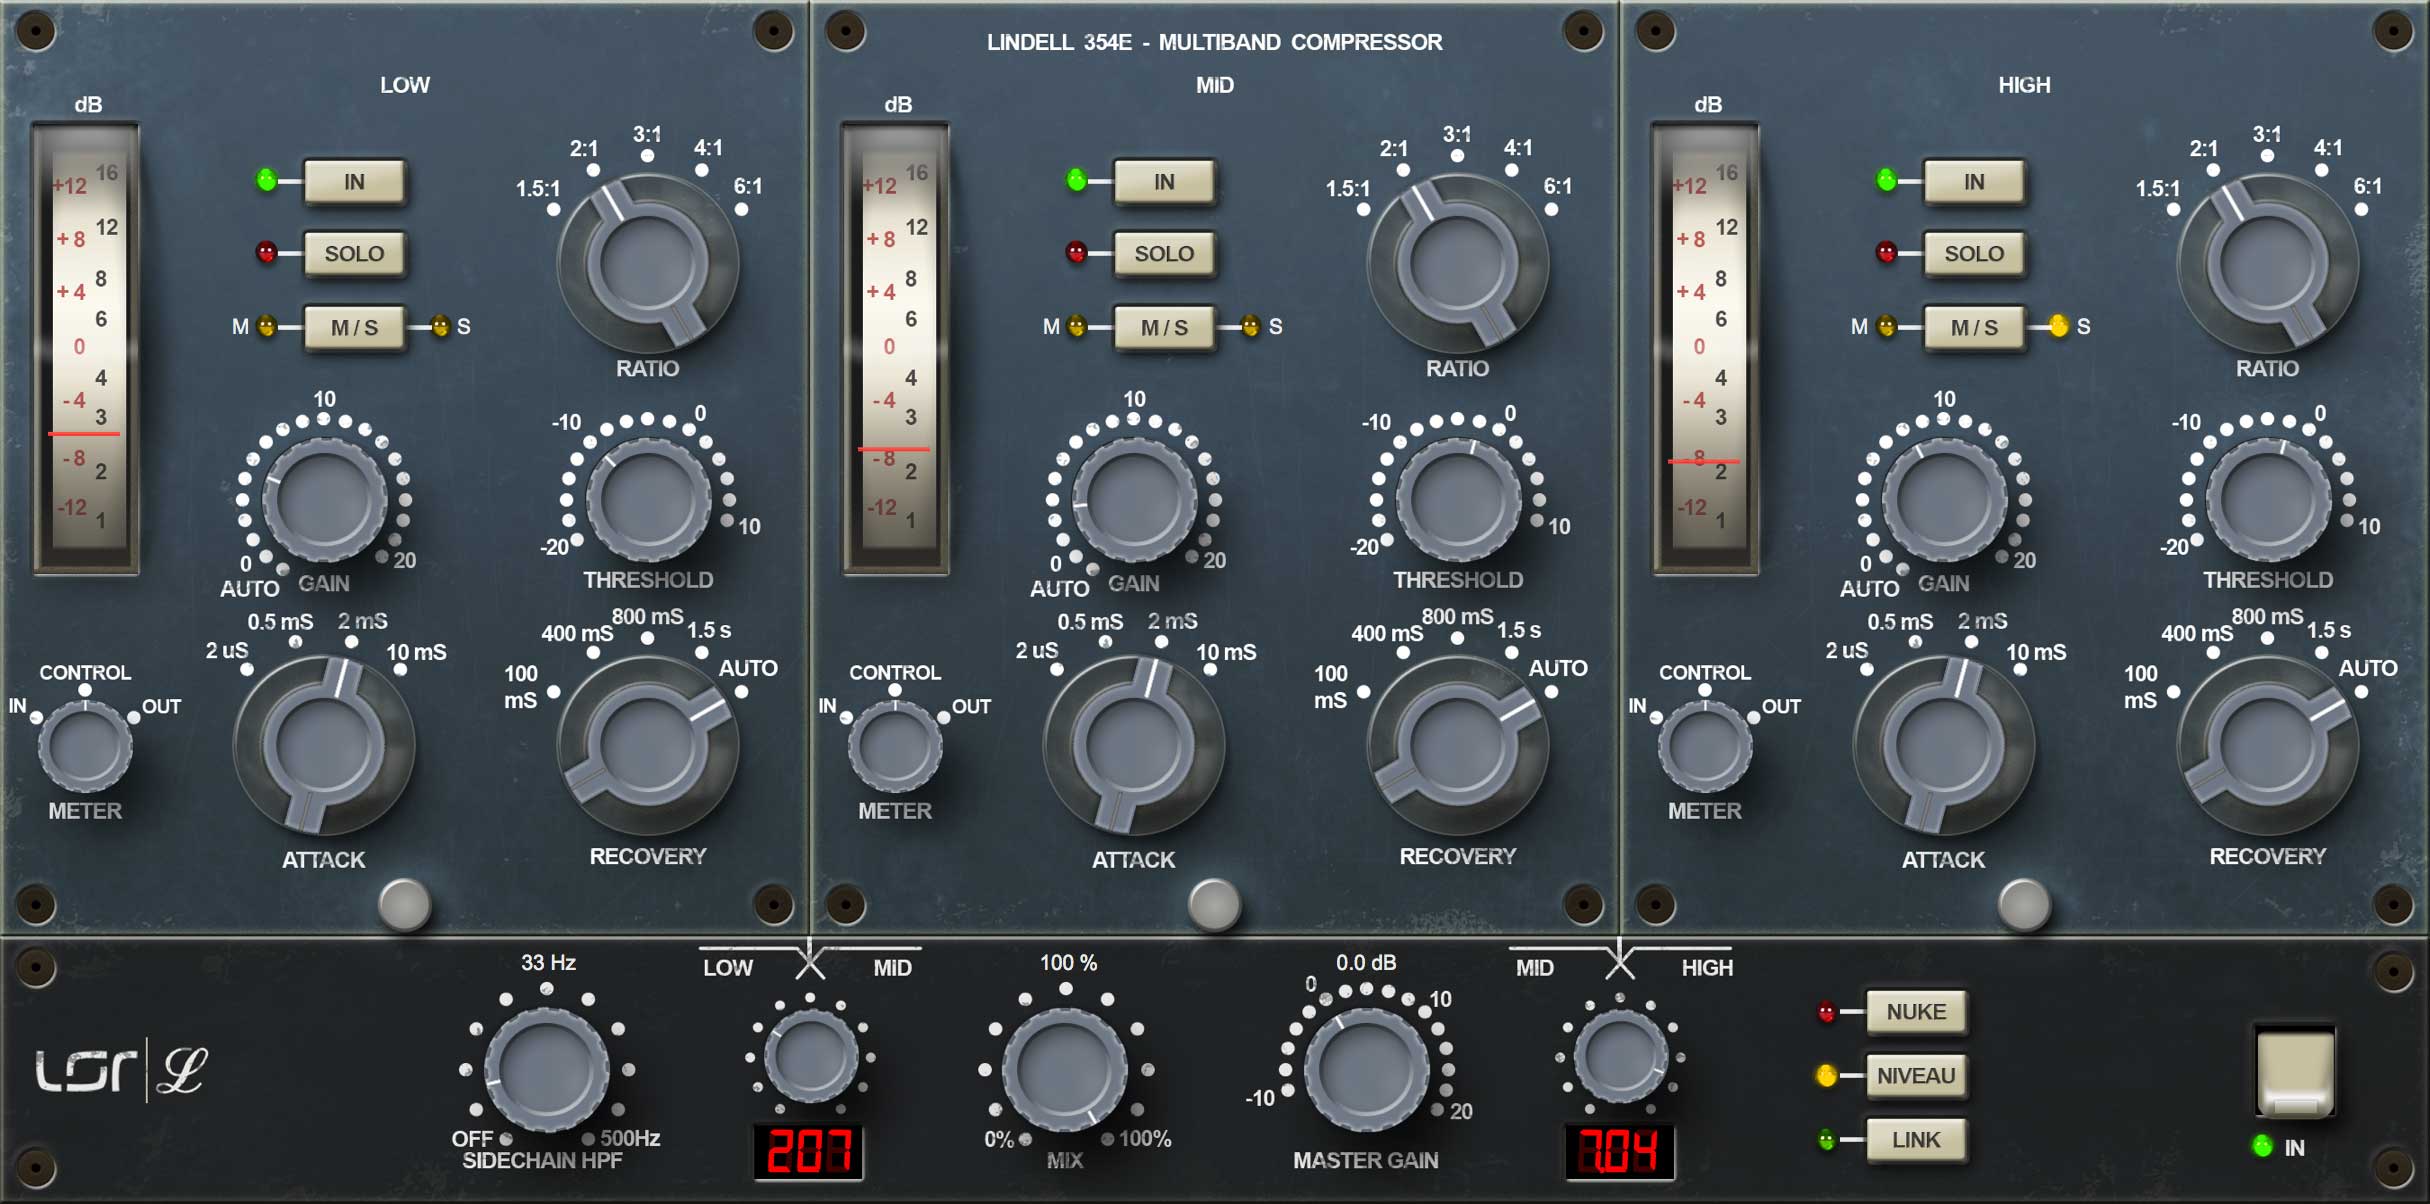 Lindell Audio – 80 Series v1.0.0 VST, VST3, AAX x86 x64 R2R